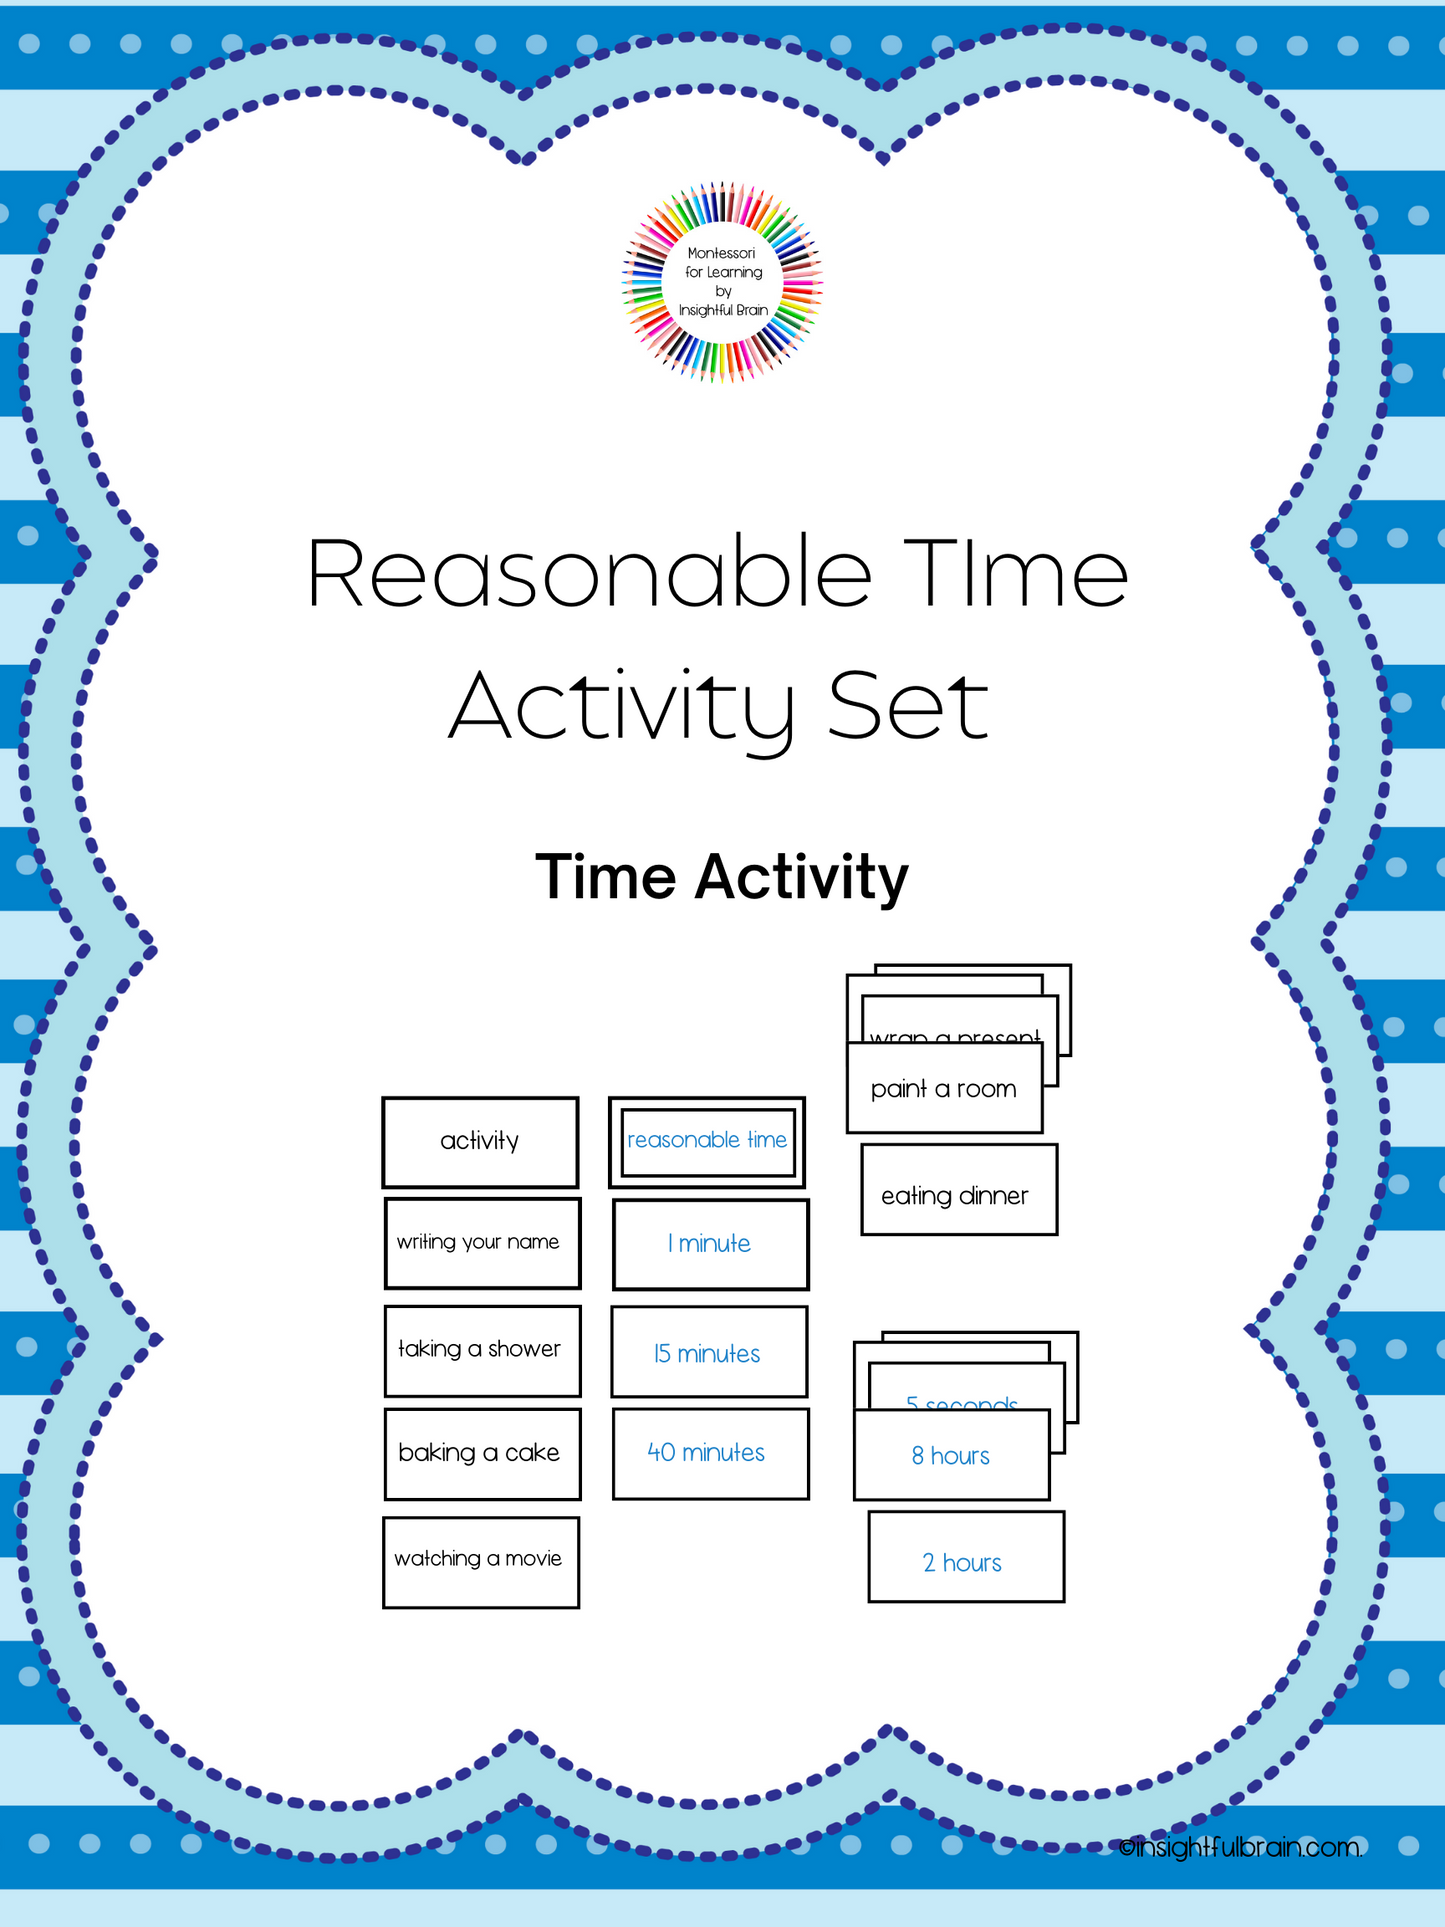 Reasonable Time Activity Set